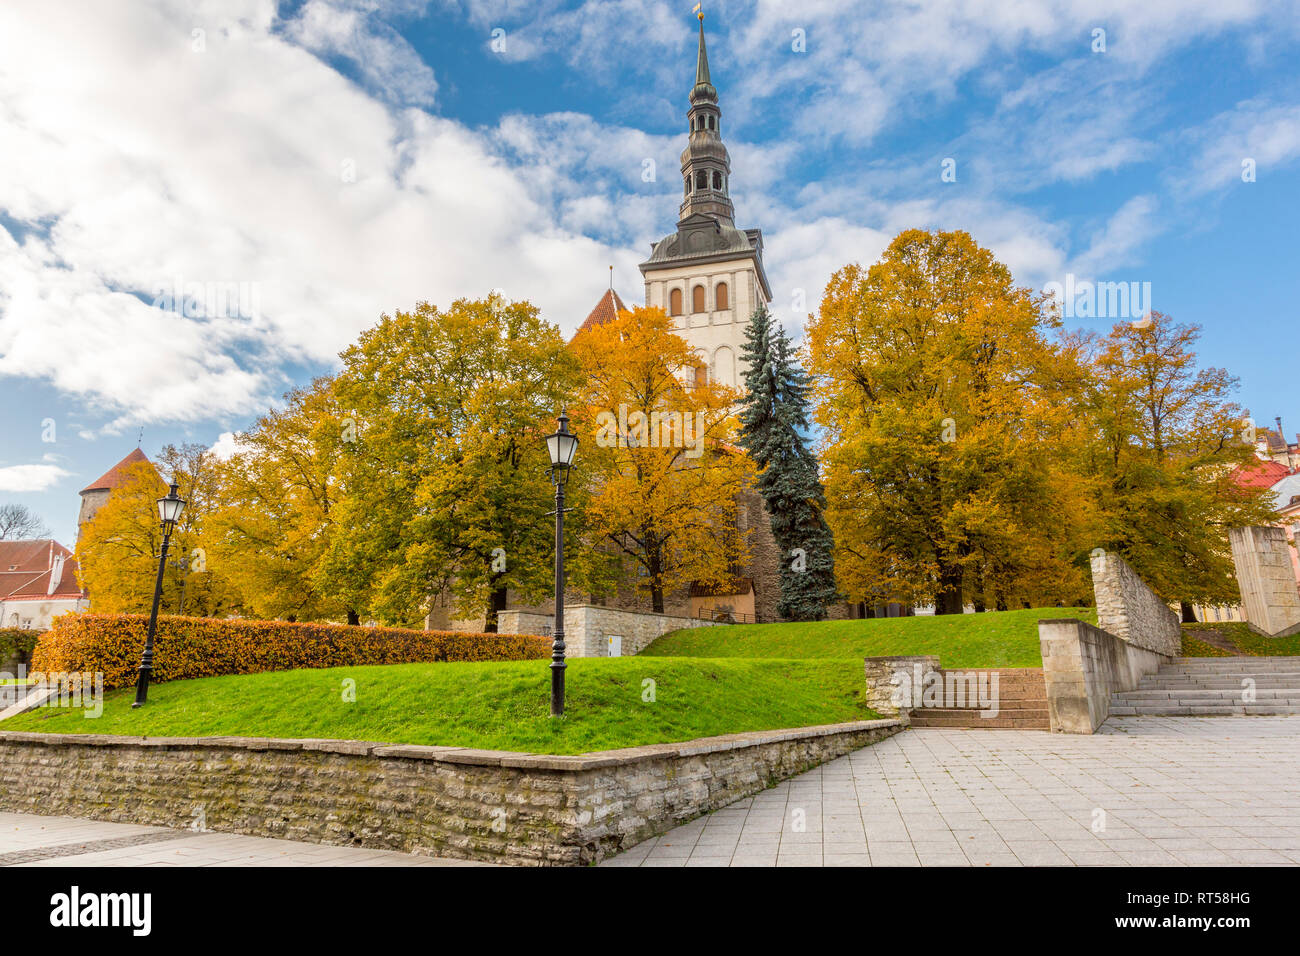 Europe, Eastern Europe, Baltic States, Estonia, Tallinn. St. Nicholas church tower, steeple. Stock Photo